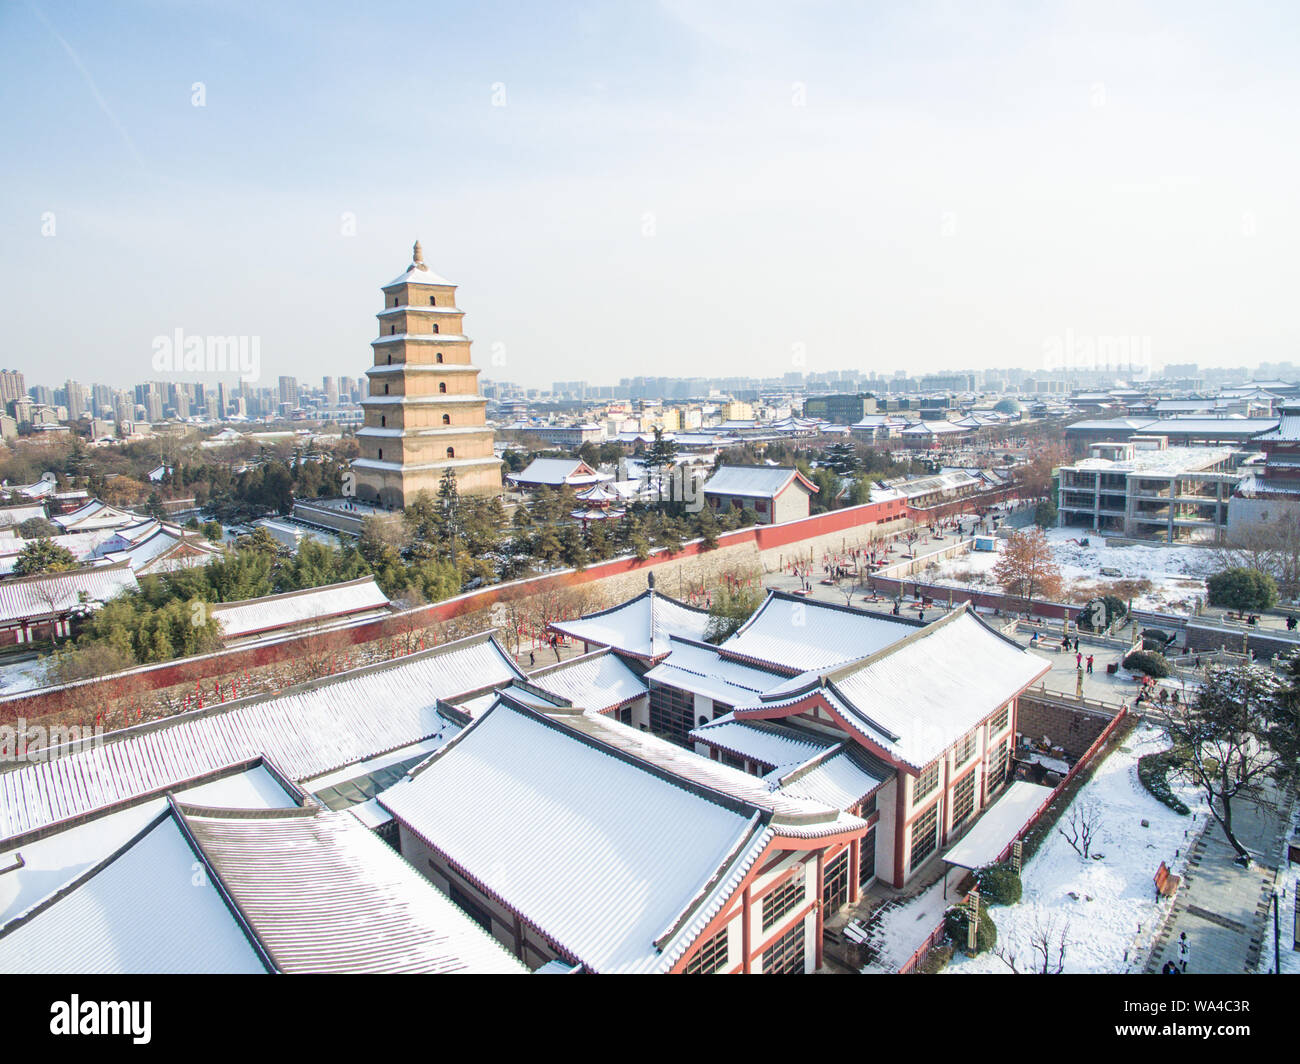 La pagode de l'oie d'hiver Banque D'Images